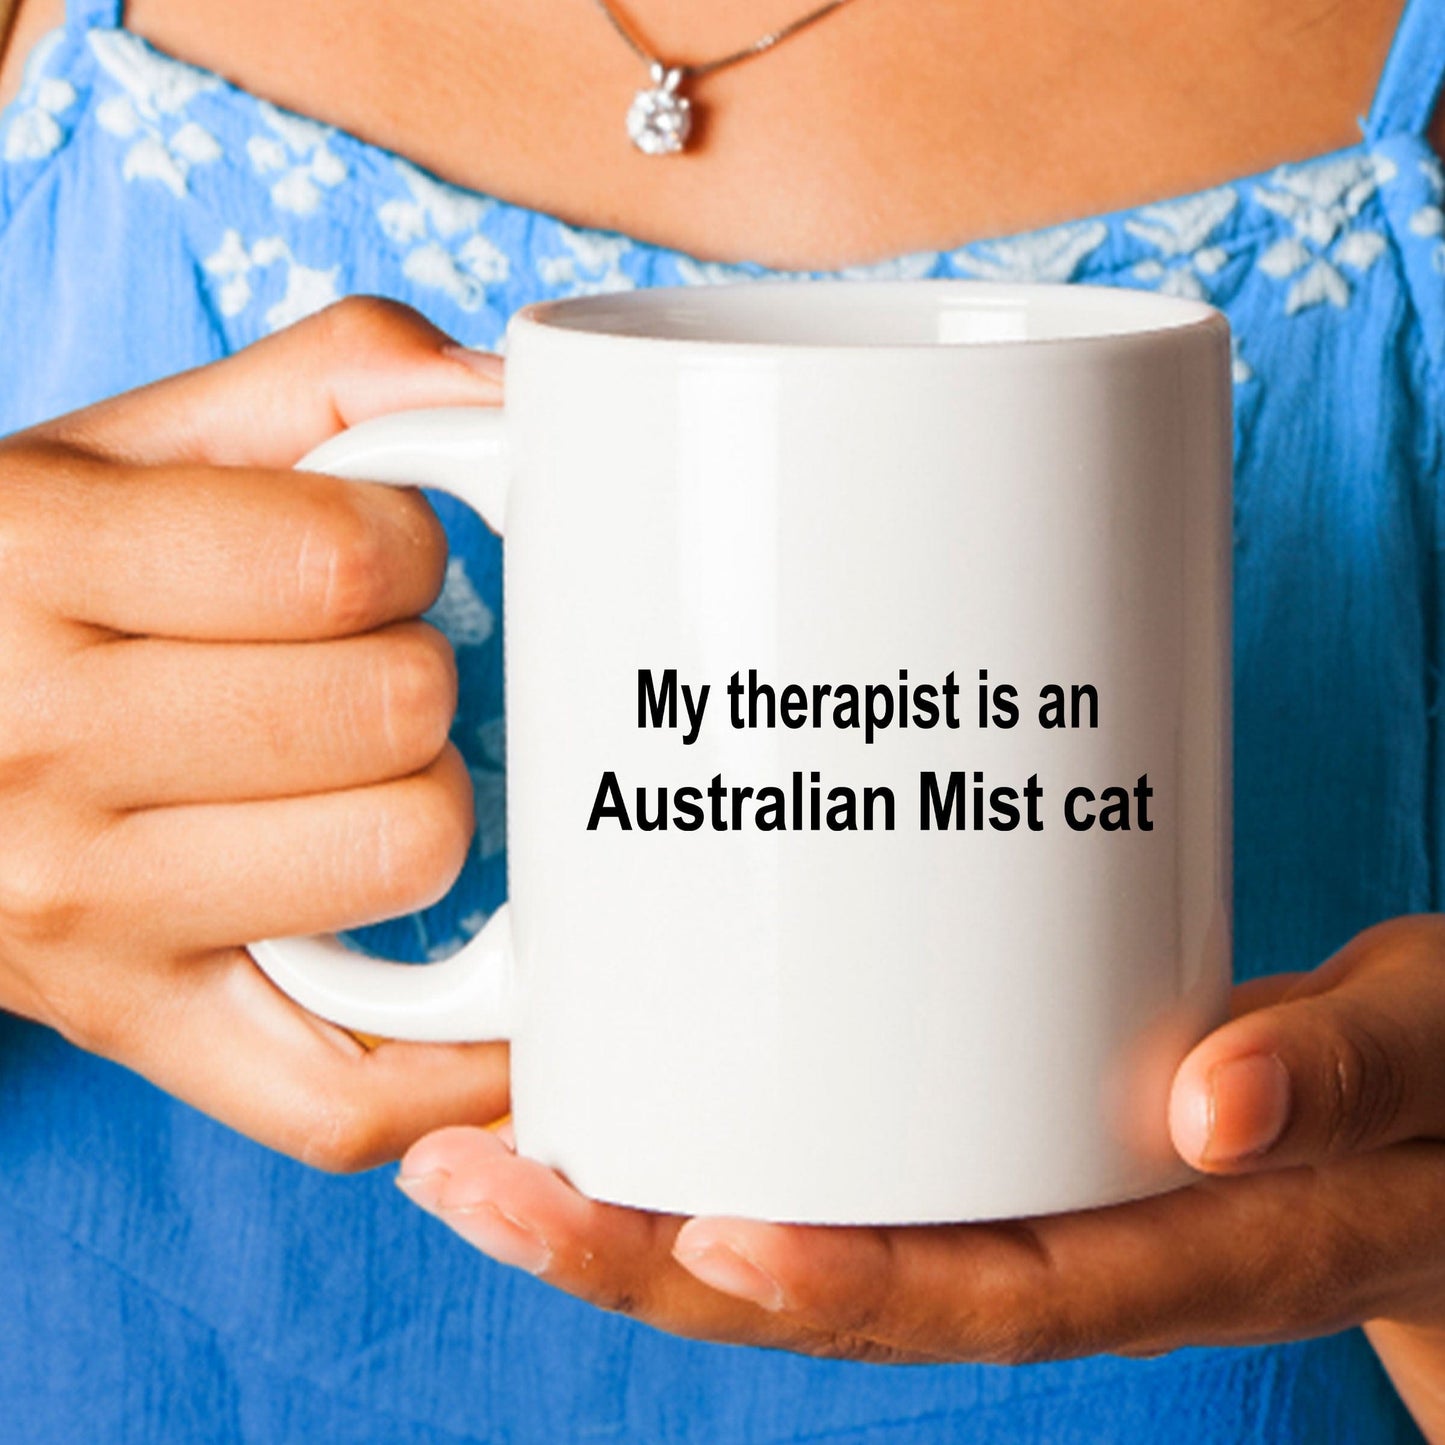 Australian Mist Cat Therapists Coffee Mug